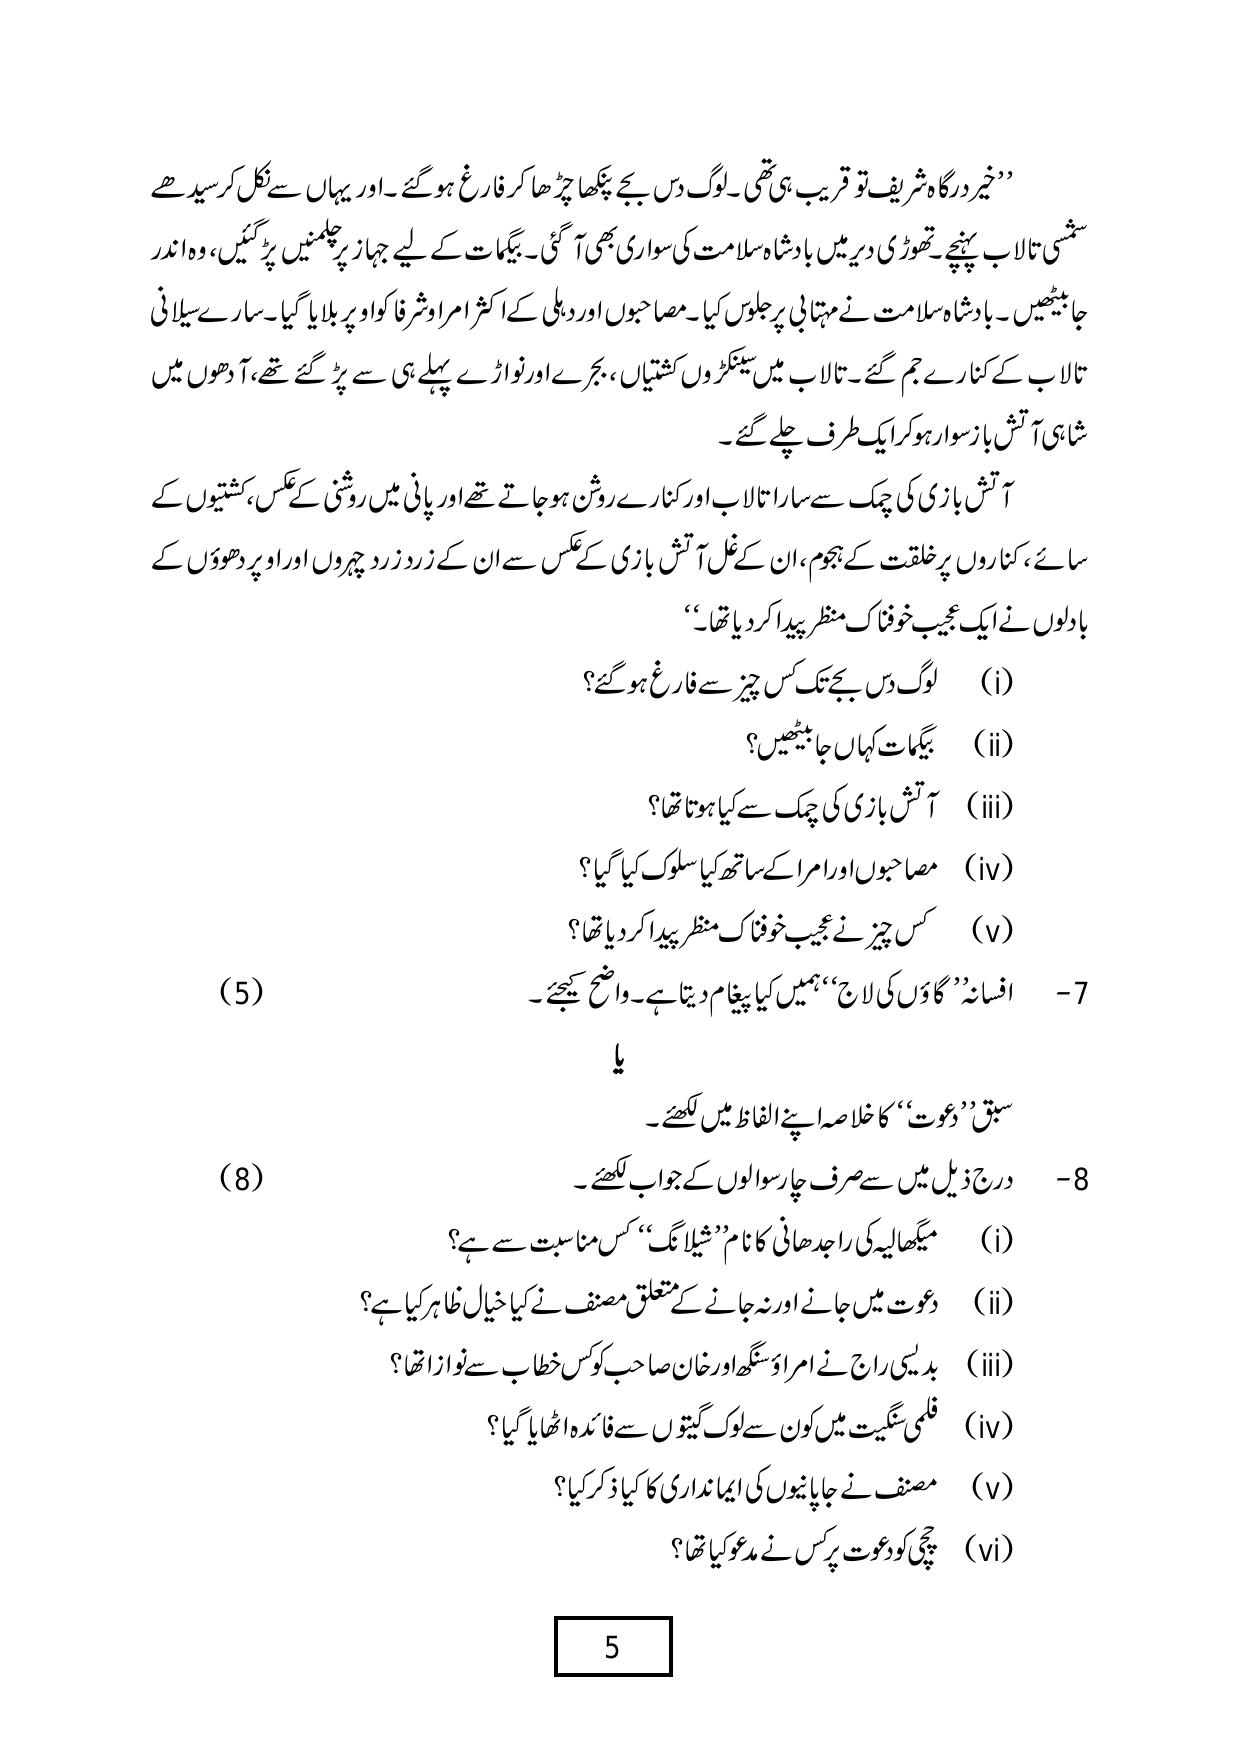 CBSE Class 12 Urdu Core -Sample Paper 2019-20 - Page 5